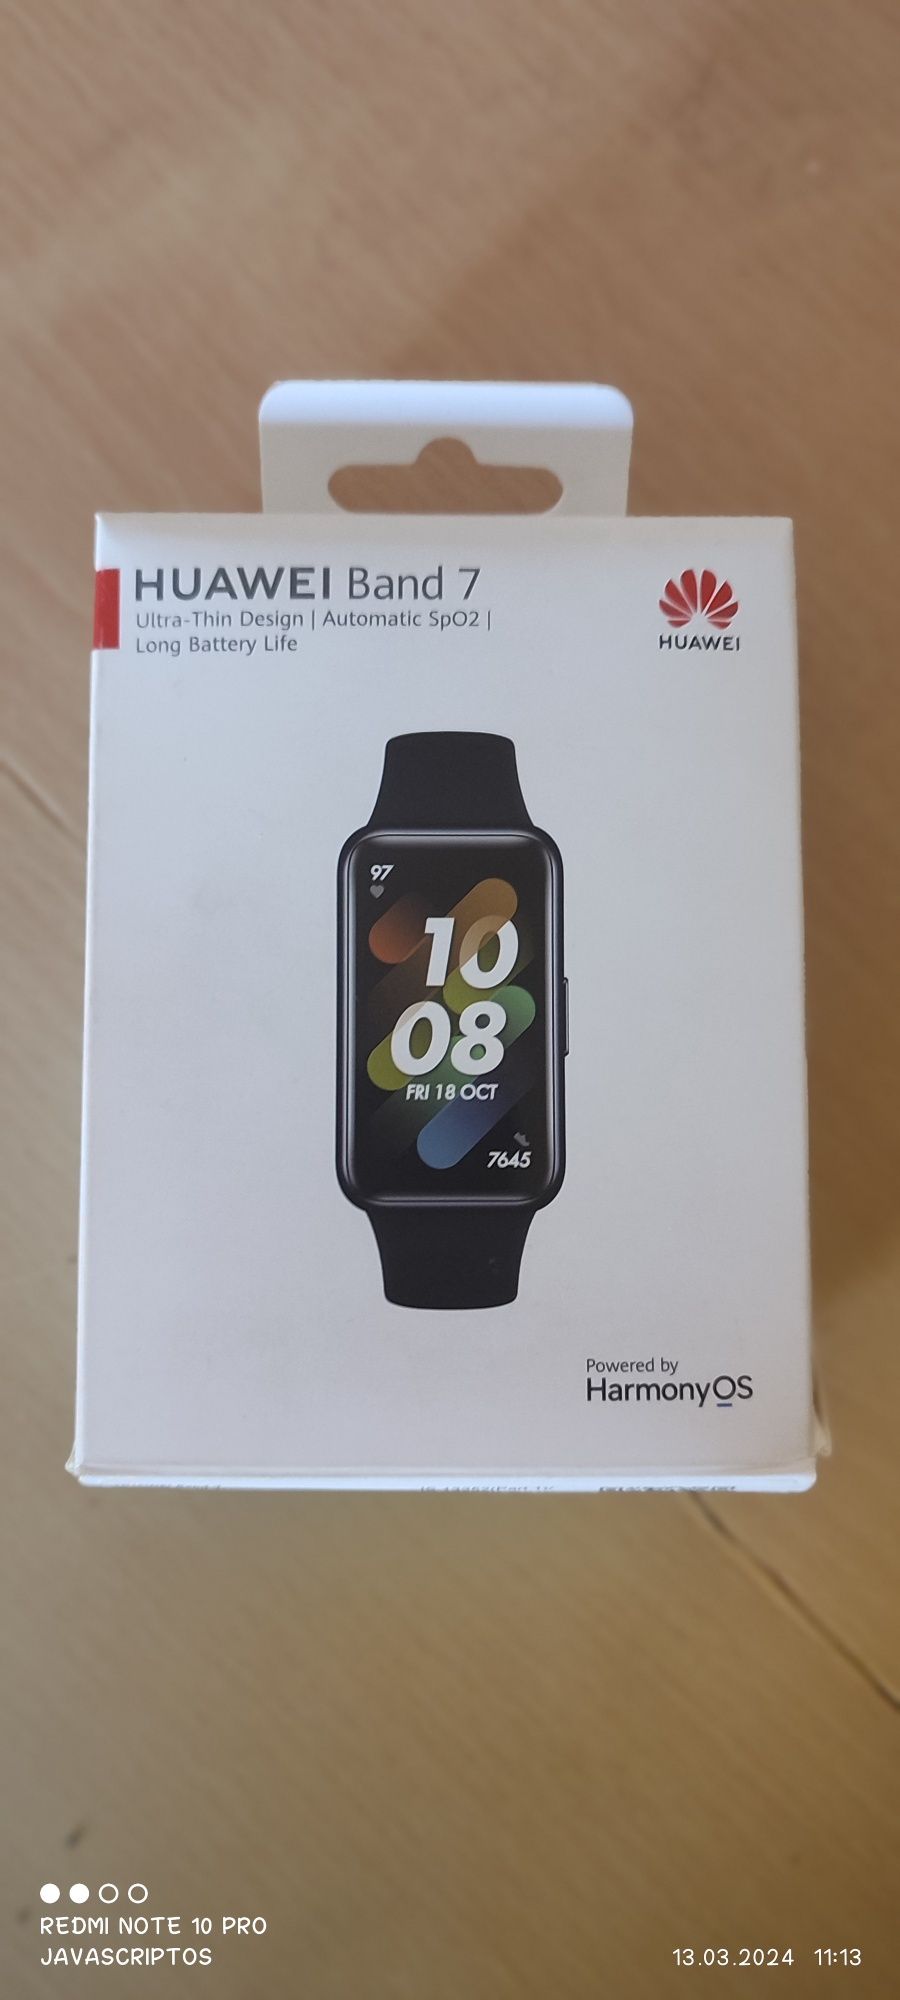 Huawei Band 7 smart soat